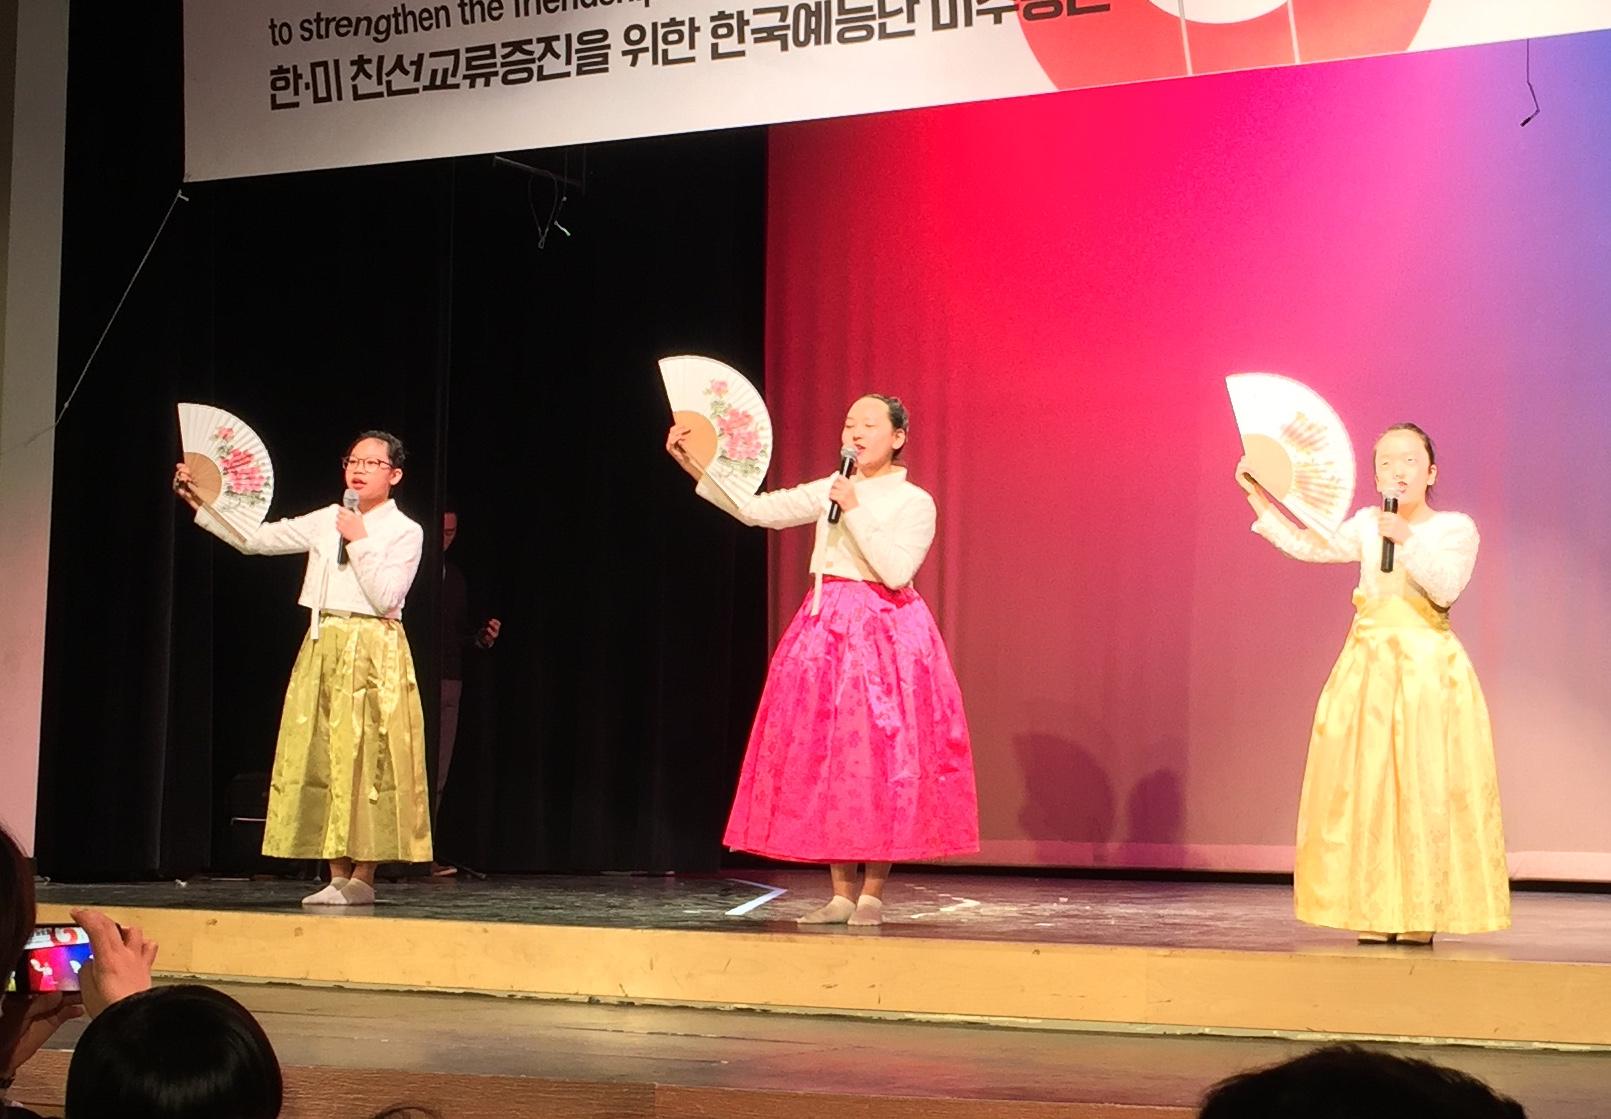 Korean students giving a speech